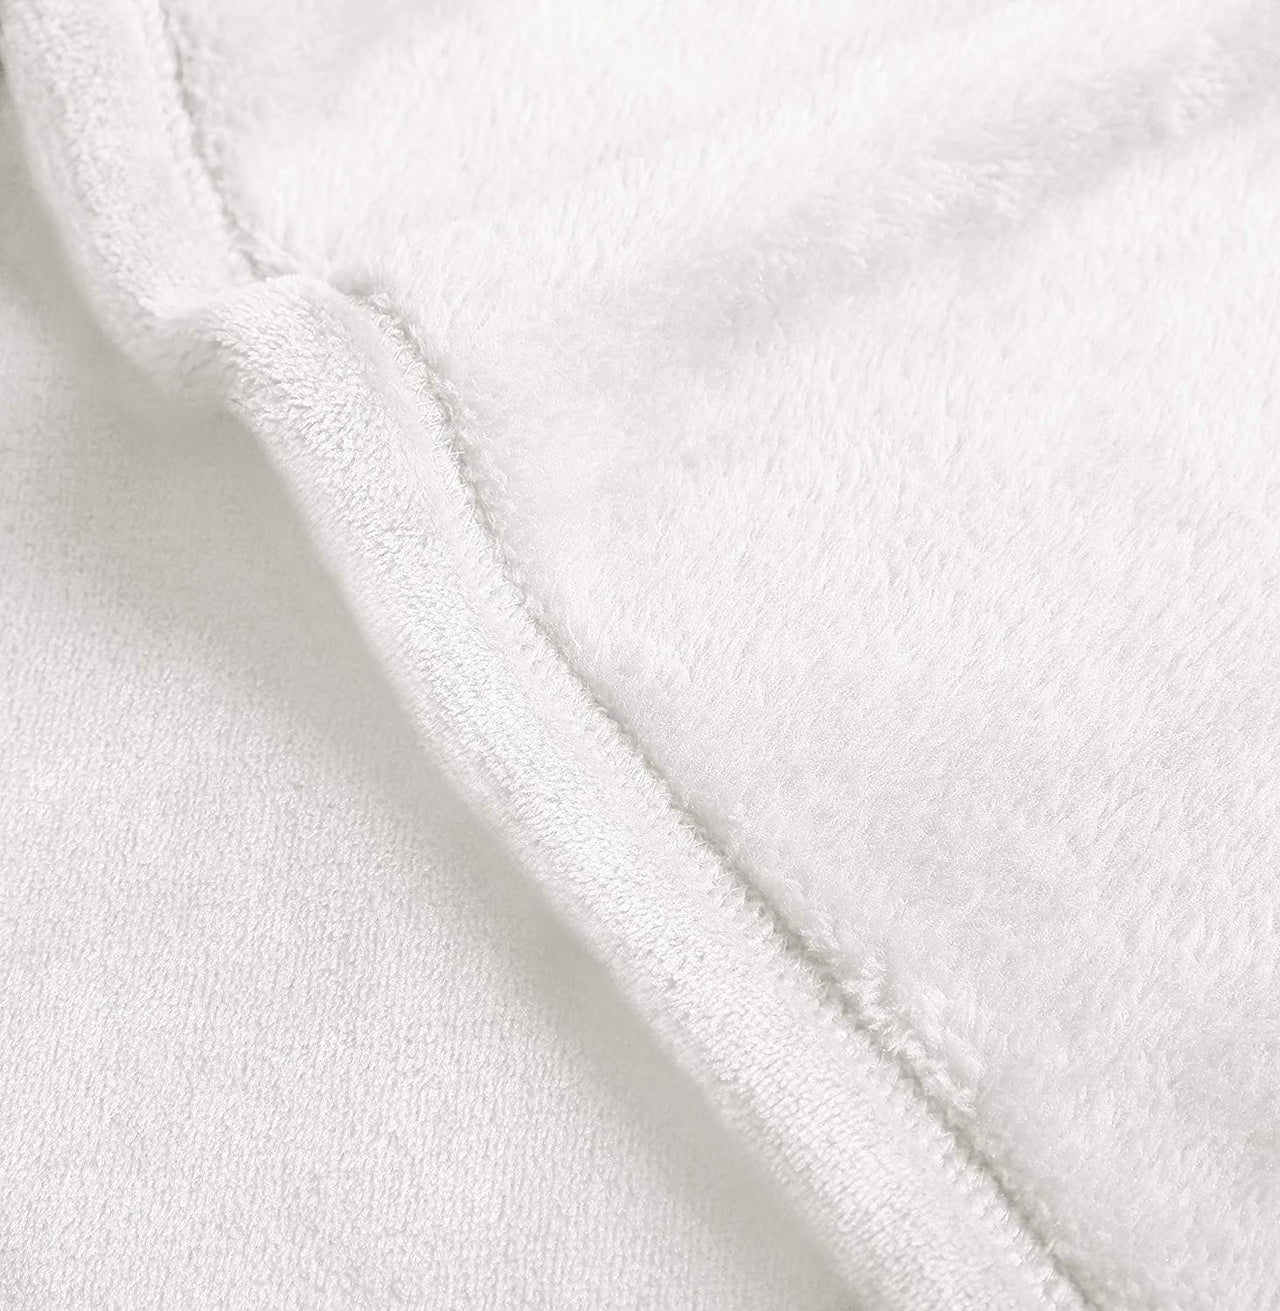 Personalized Dog Blanket Gift Idea - Bichon Frise Fucupcakes For Dog Lover - Fleece Blanket